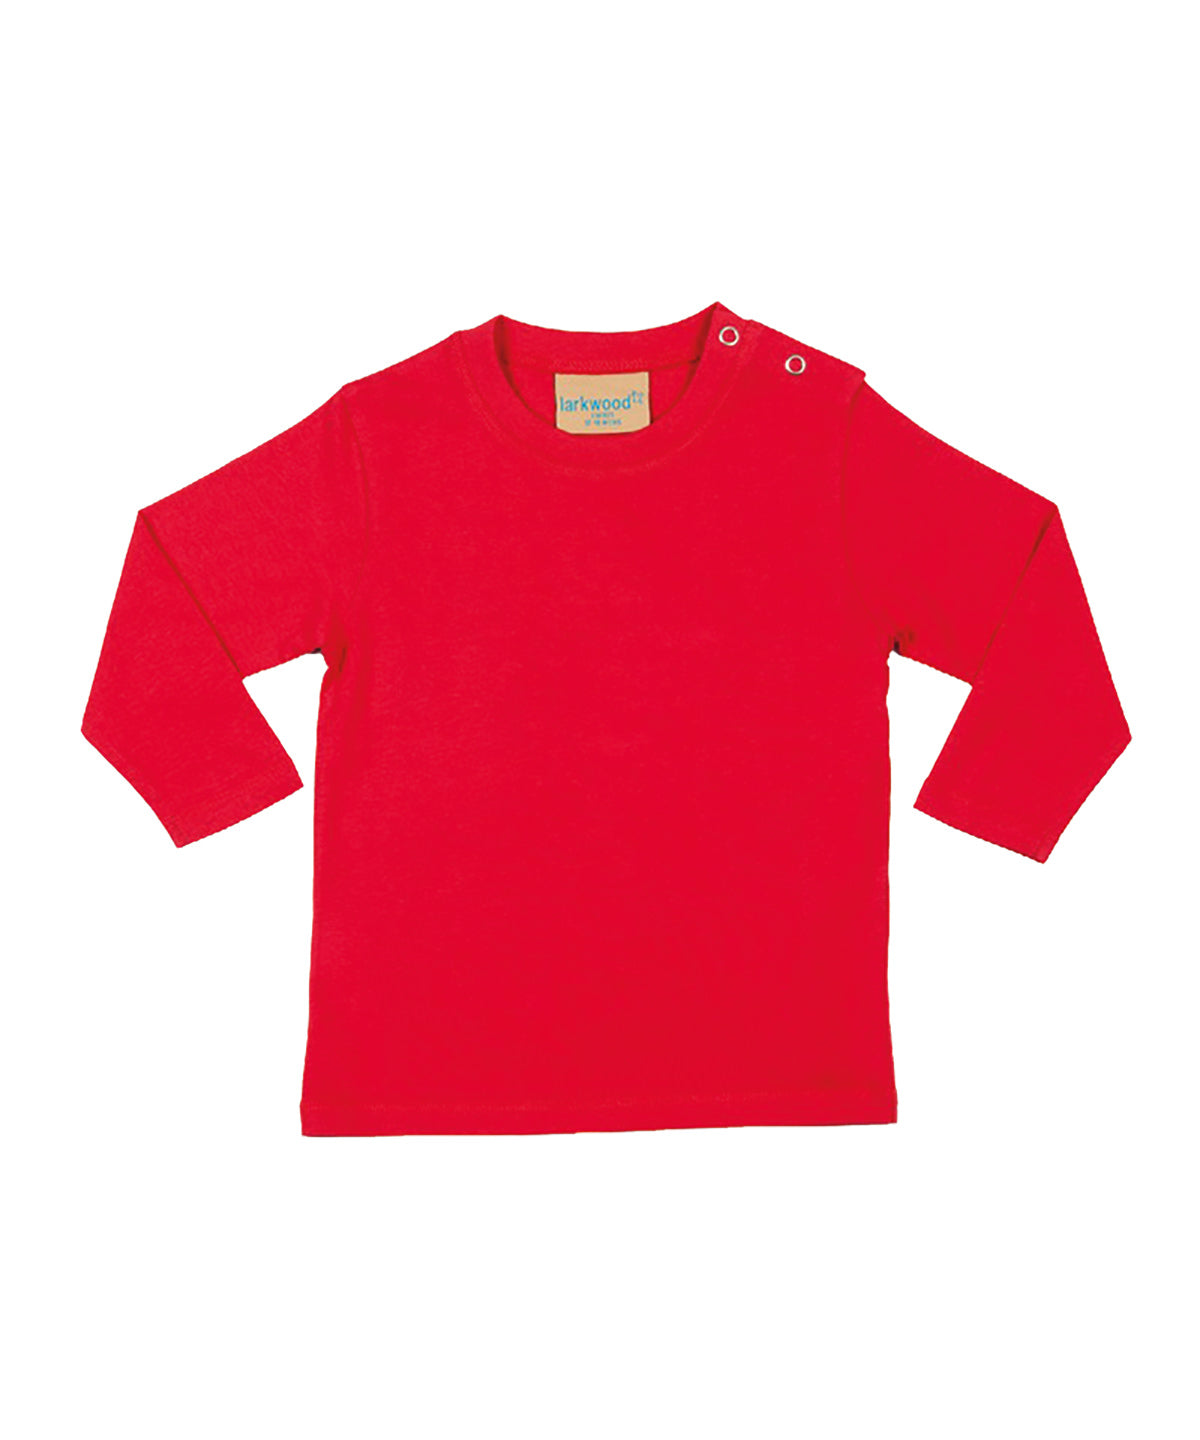 Personalised T-Shirts - Black Larkwood Long-sleeved t-shirt